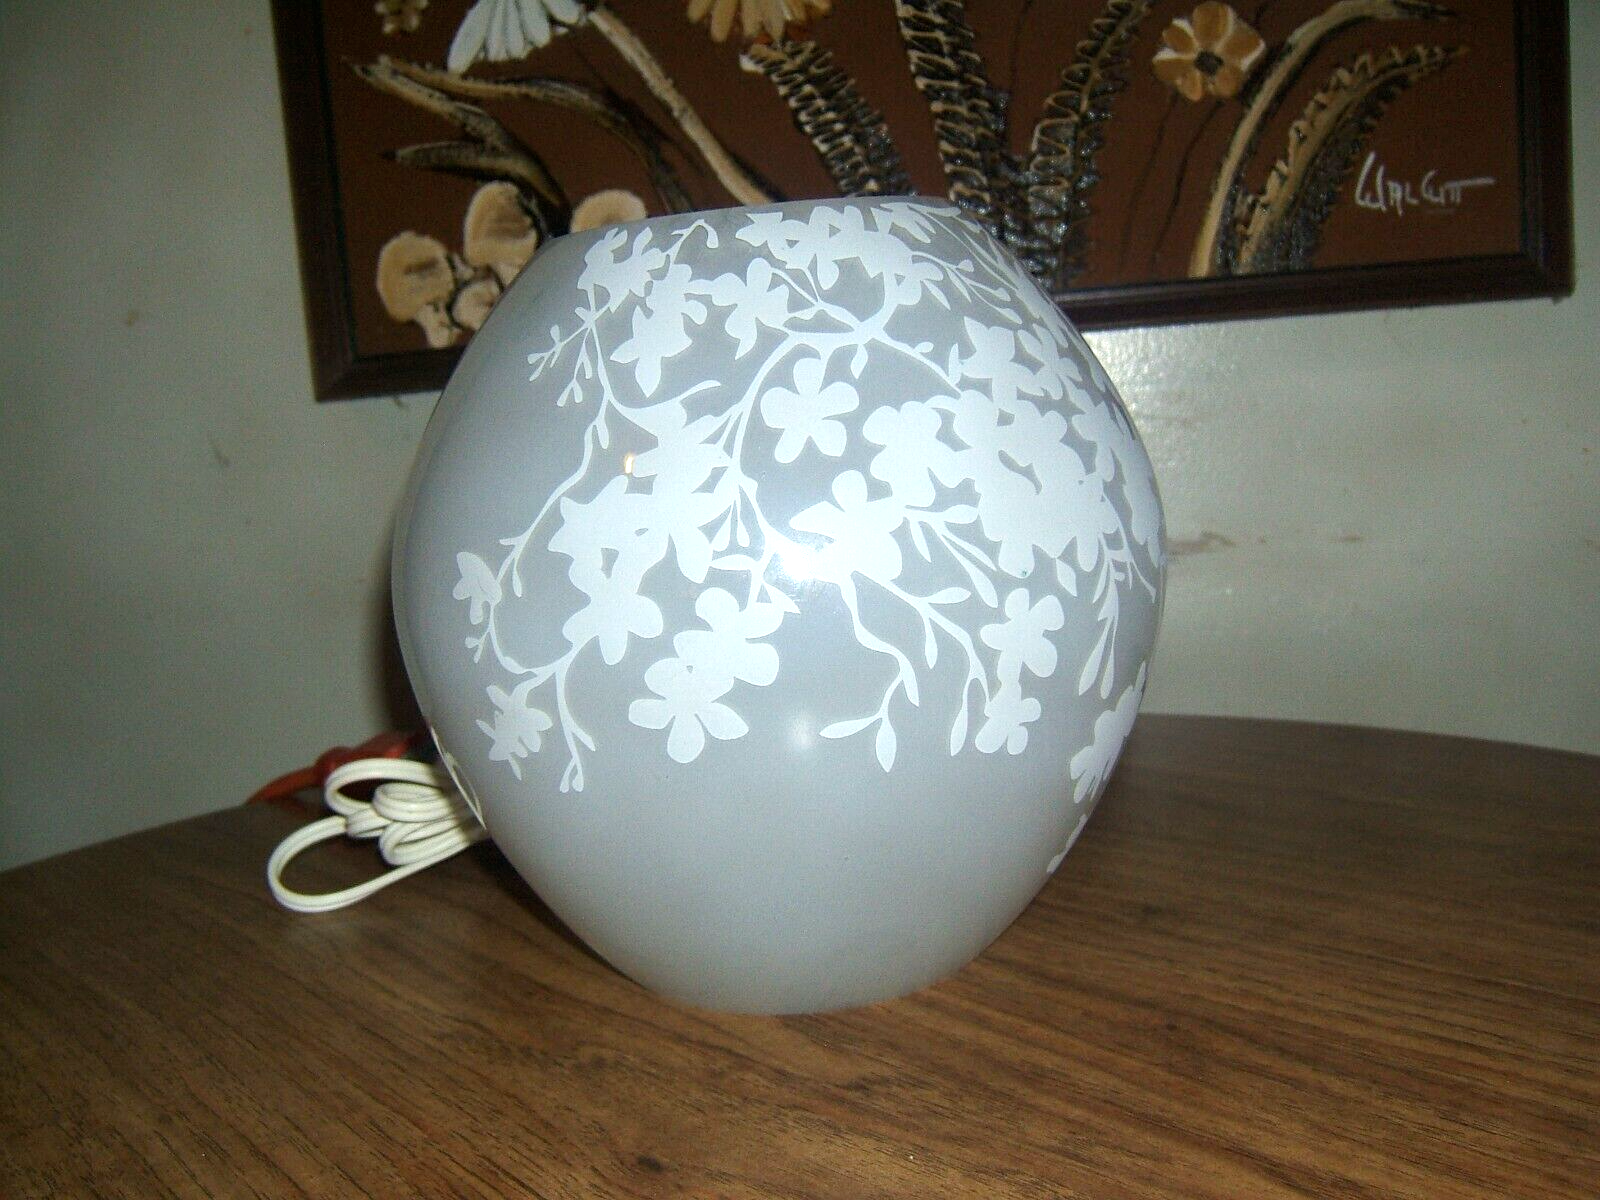 KNUBBIG Table lamp, cherry-blossoms white | eBay